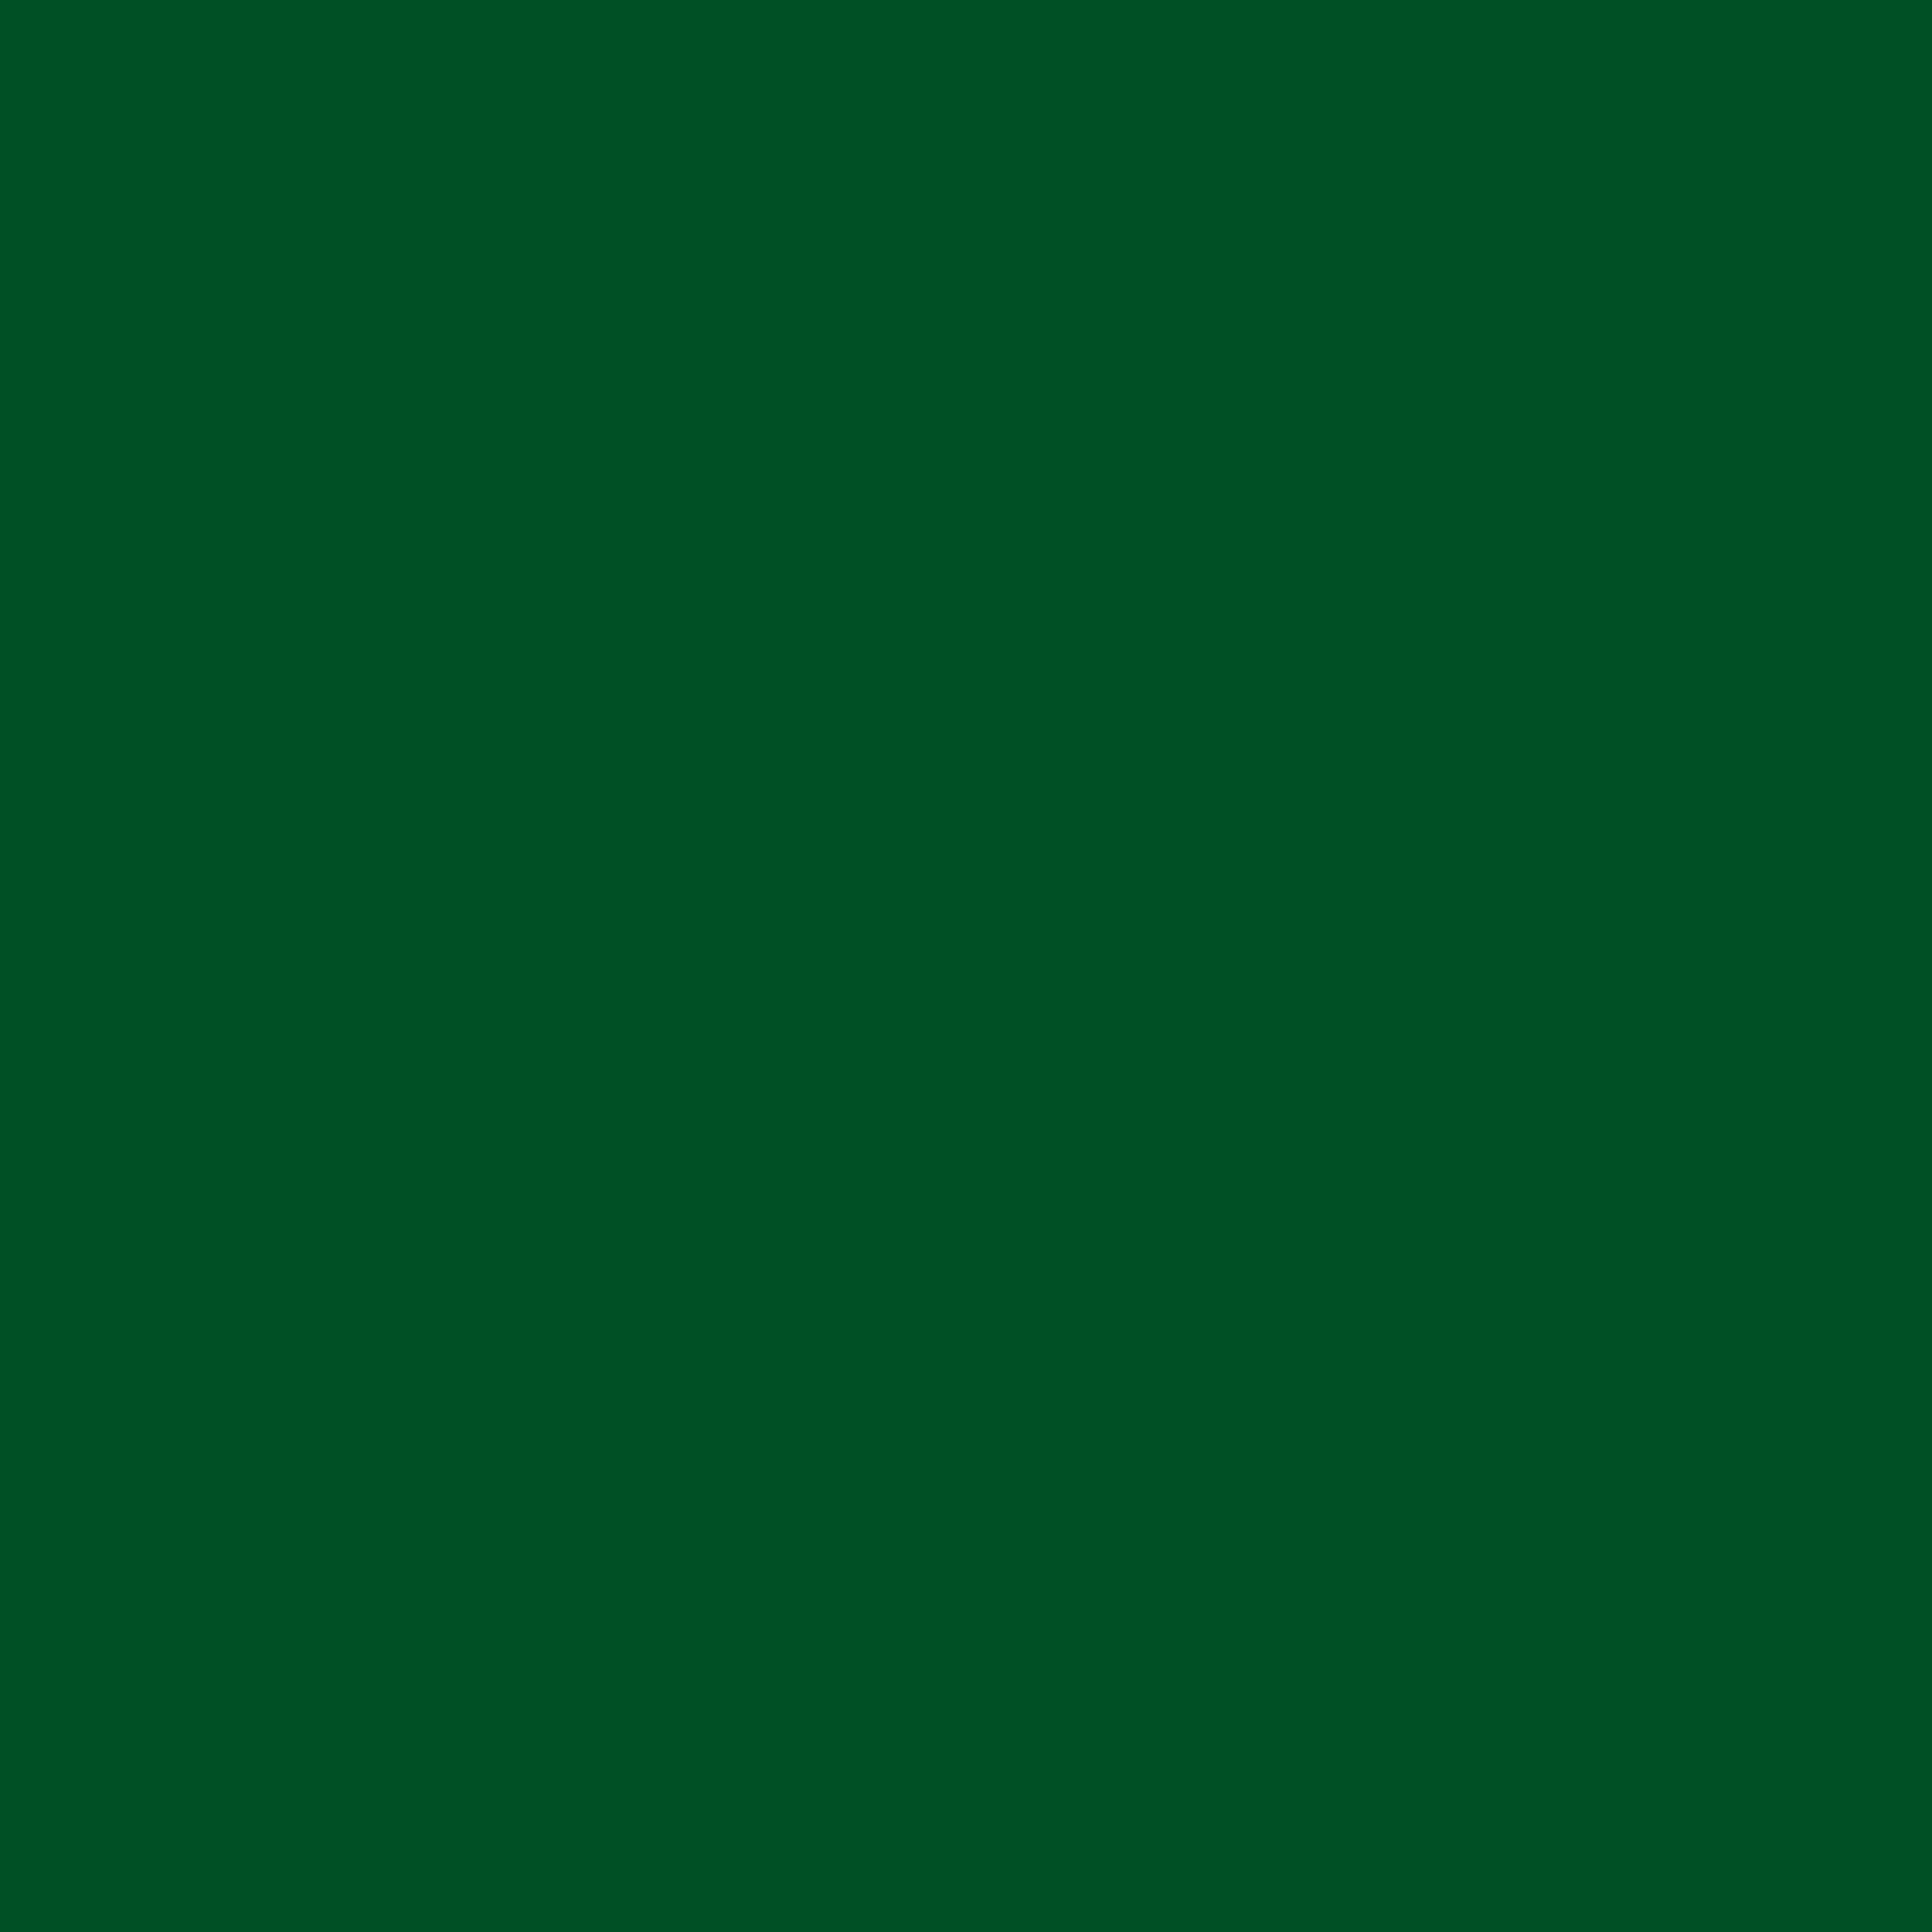 Consolan  Wetterschutzfarbe Profi Holzschutz, grün 2,5 Liter